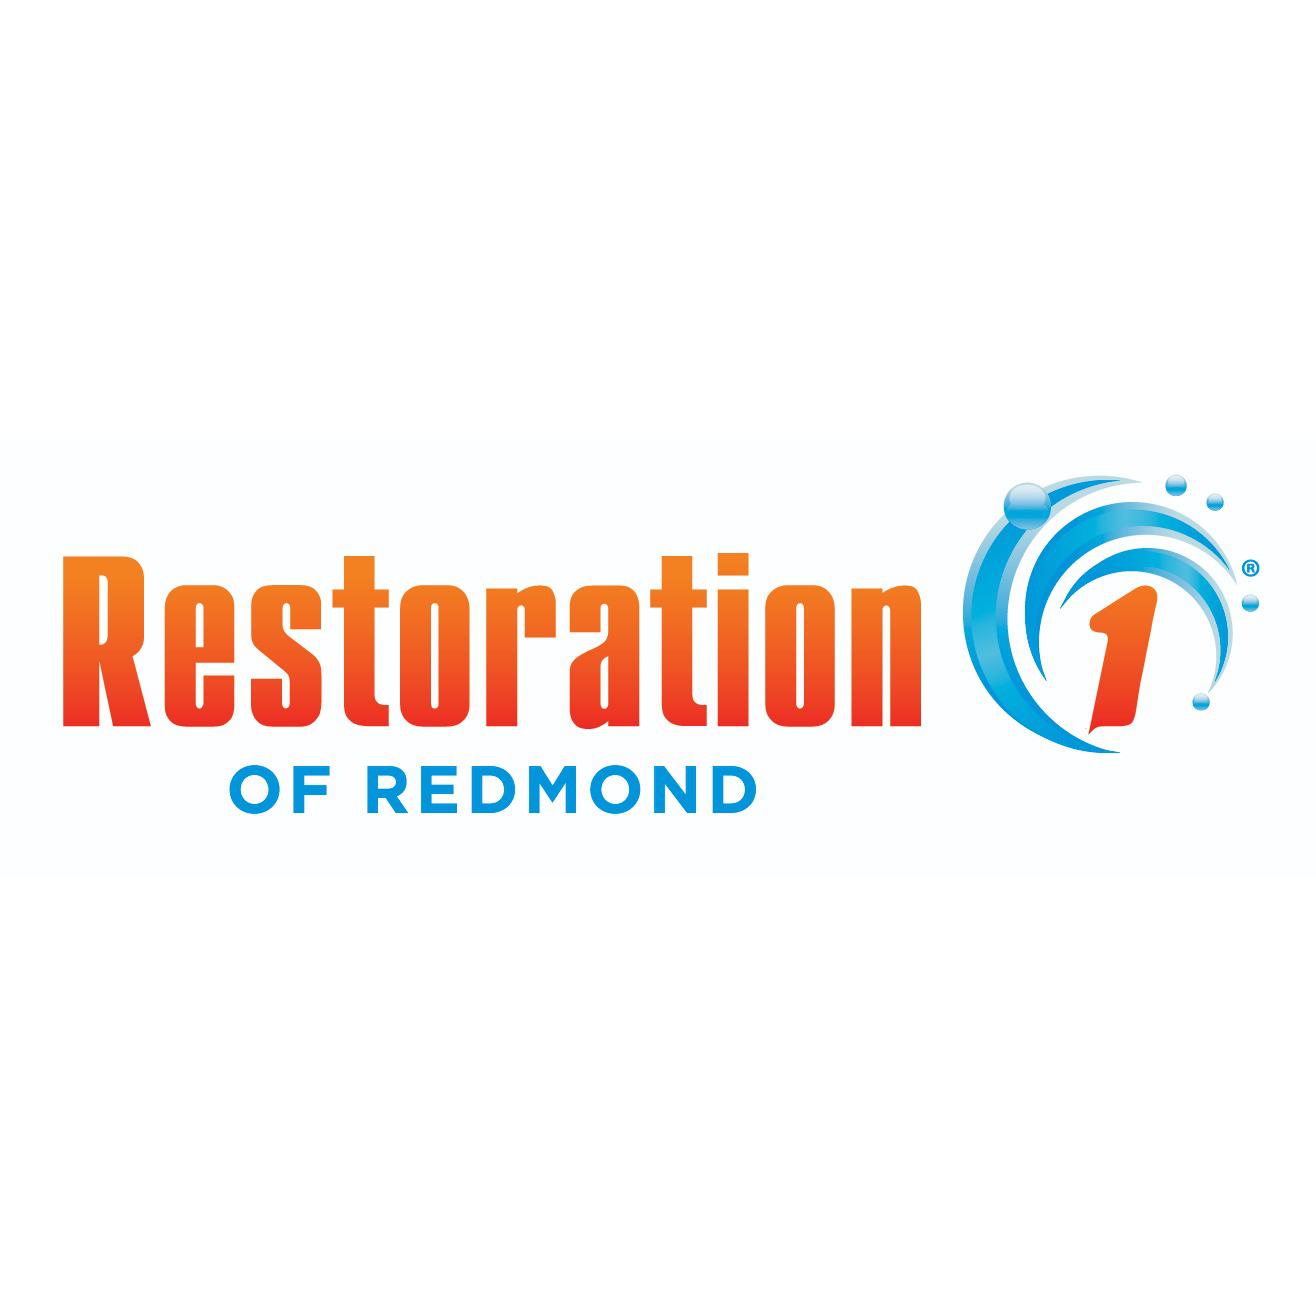 Restoration 1 of Redmond